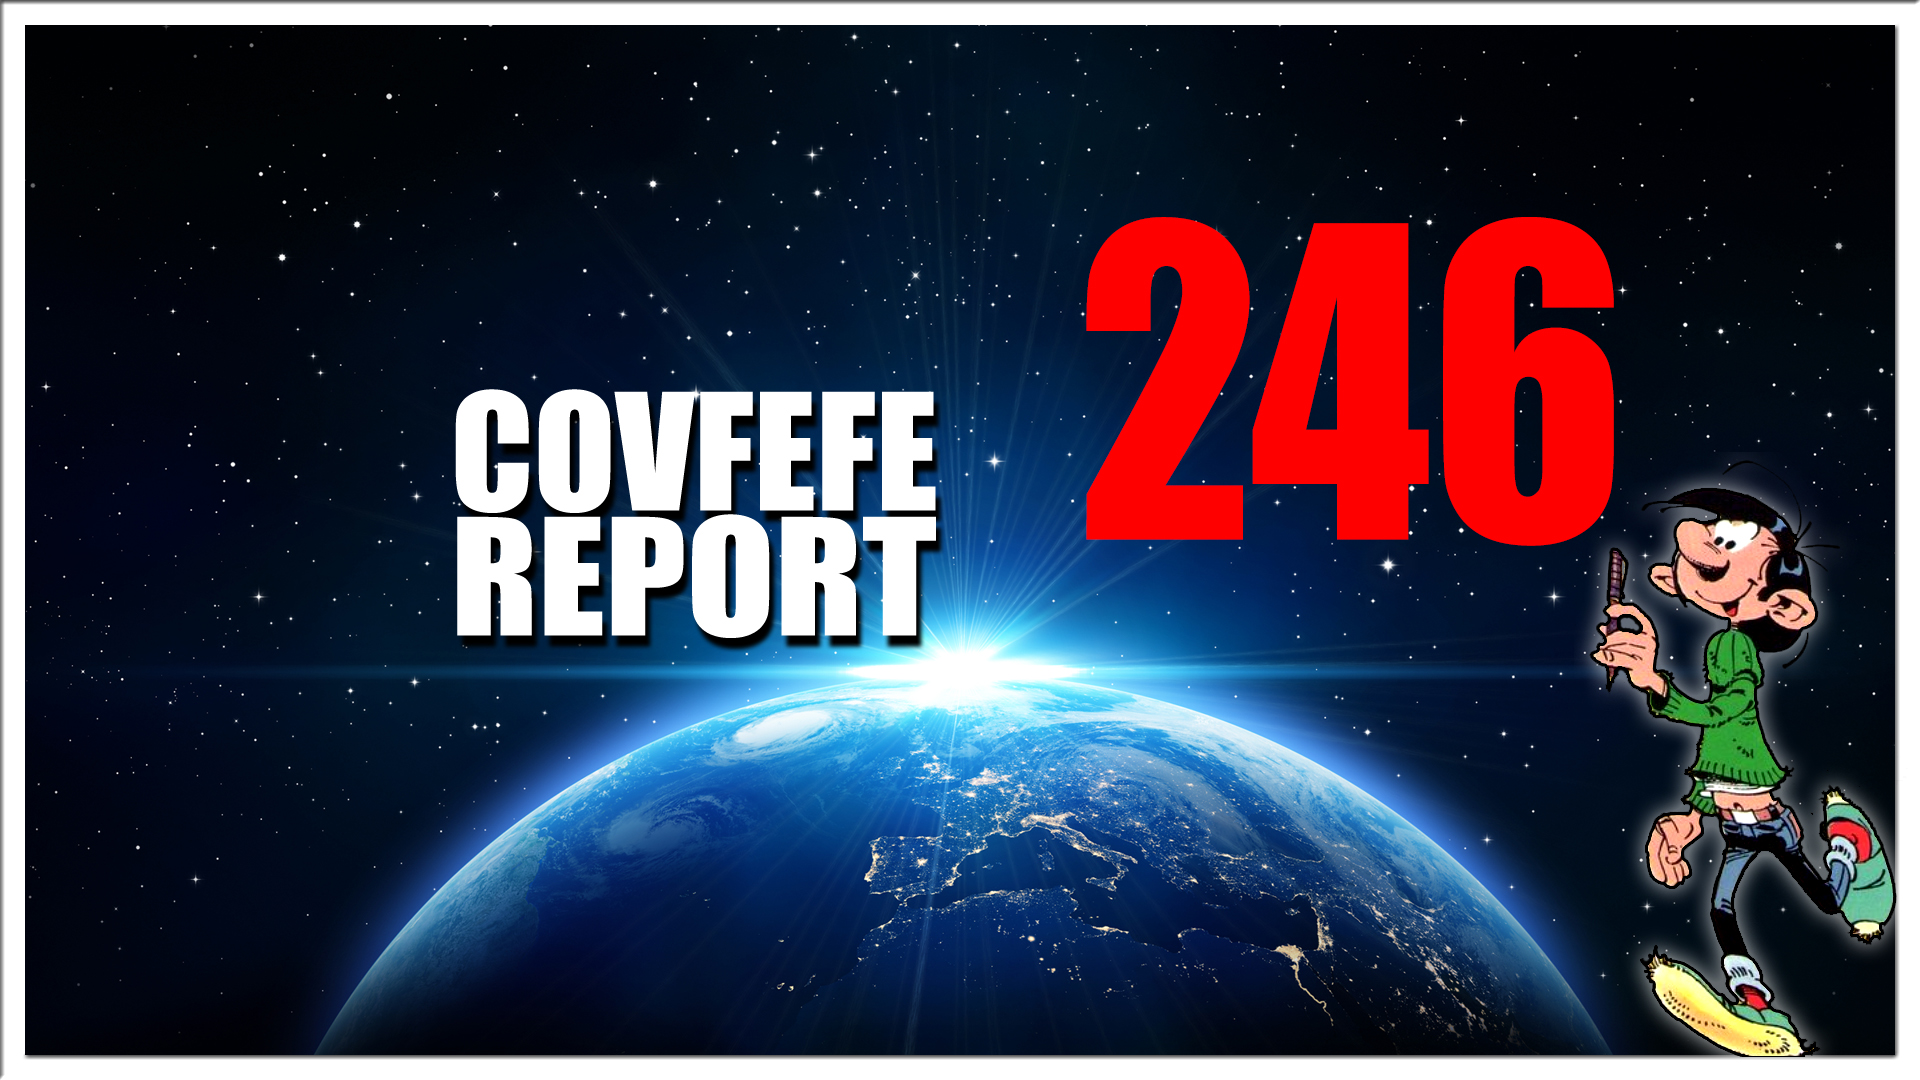 Covfefe Report 246. ngt